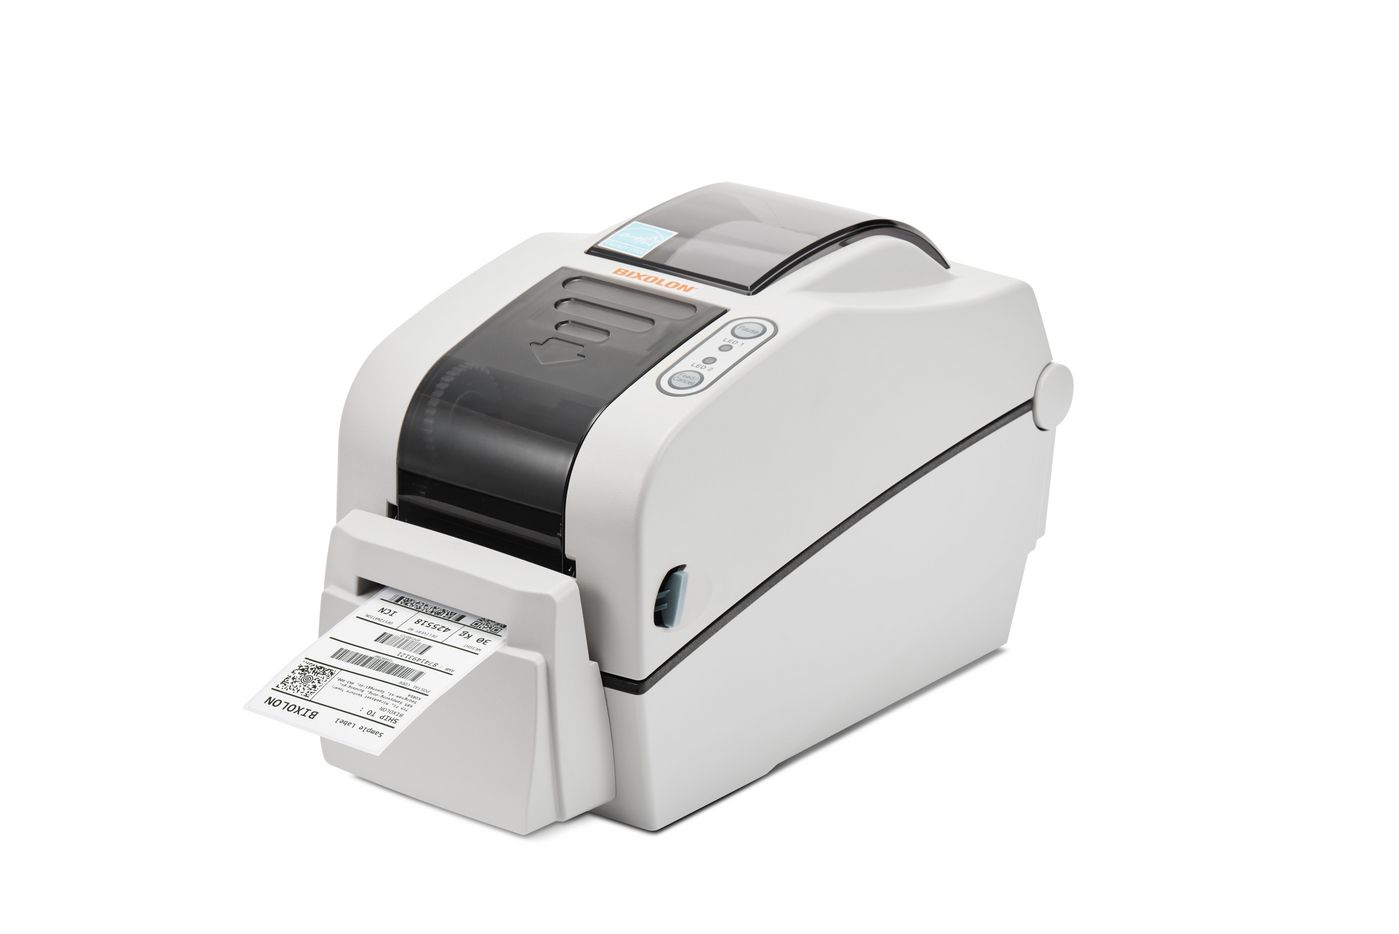 Slp-tx223e - Label Printer - Direct Thermal - USB / Serial / Parallel